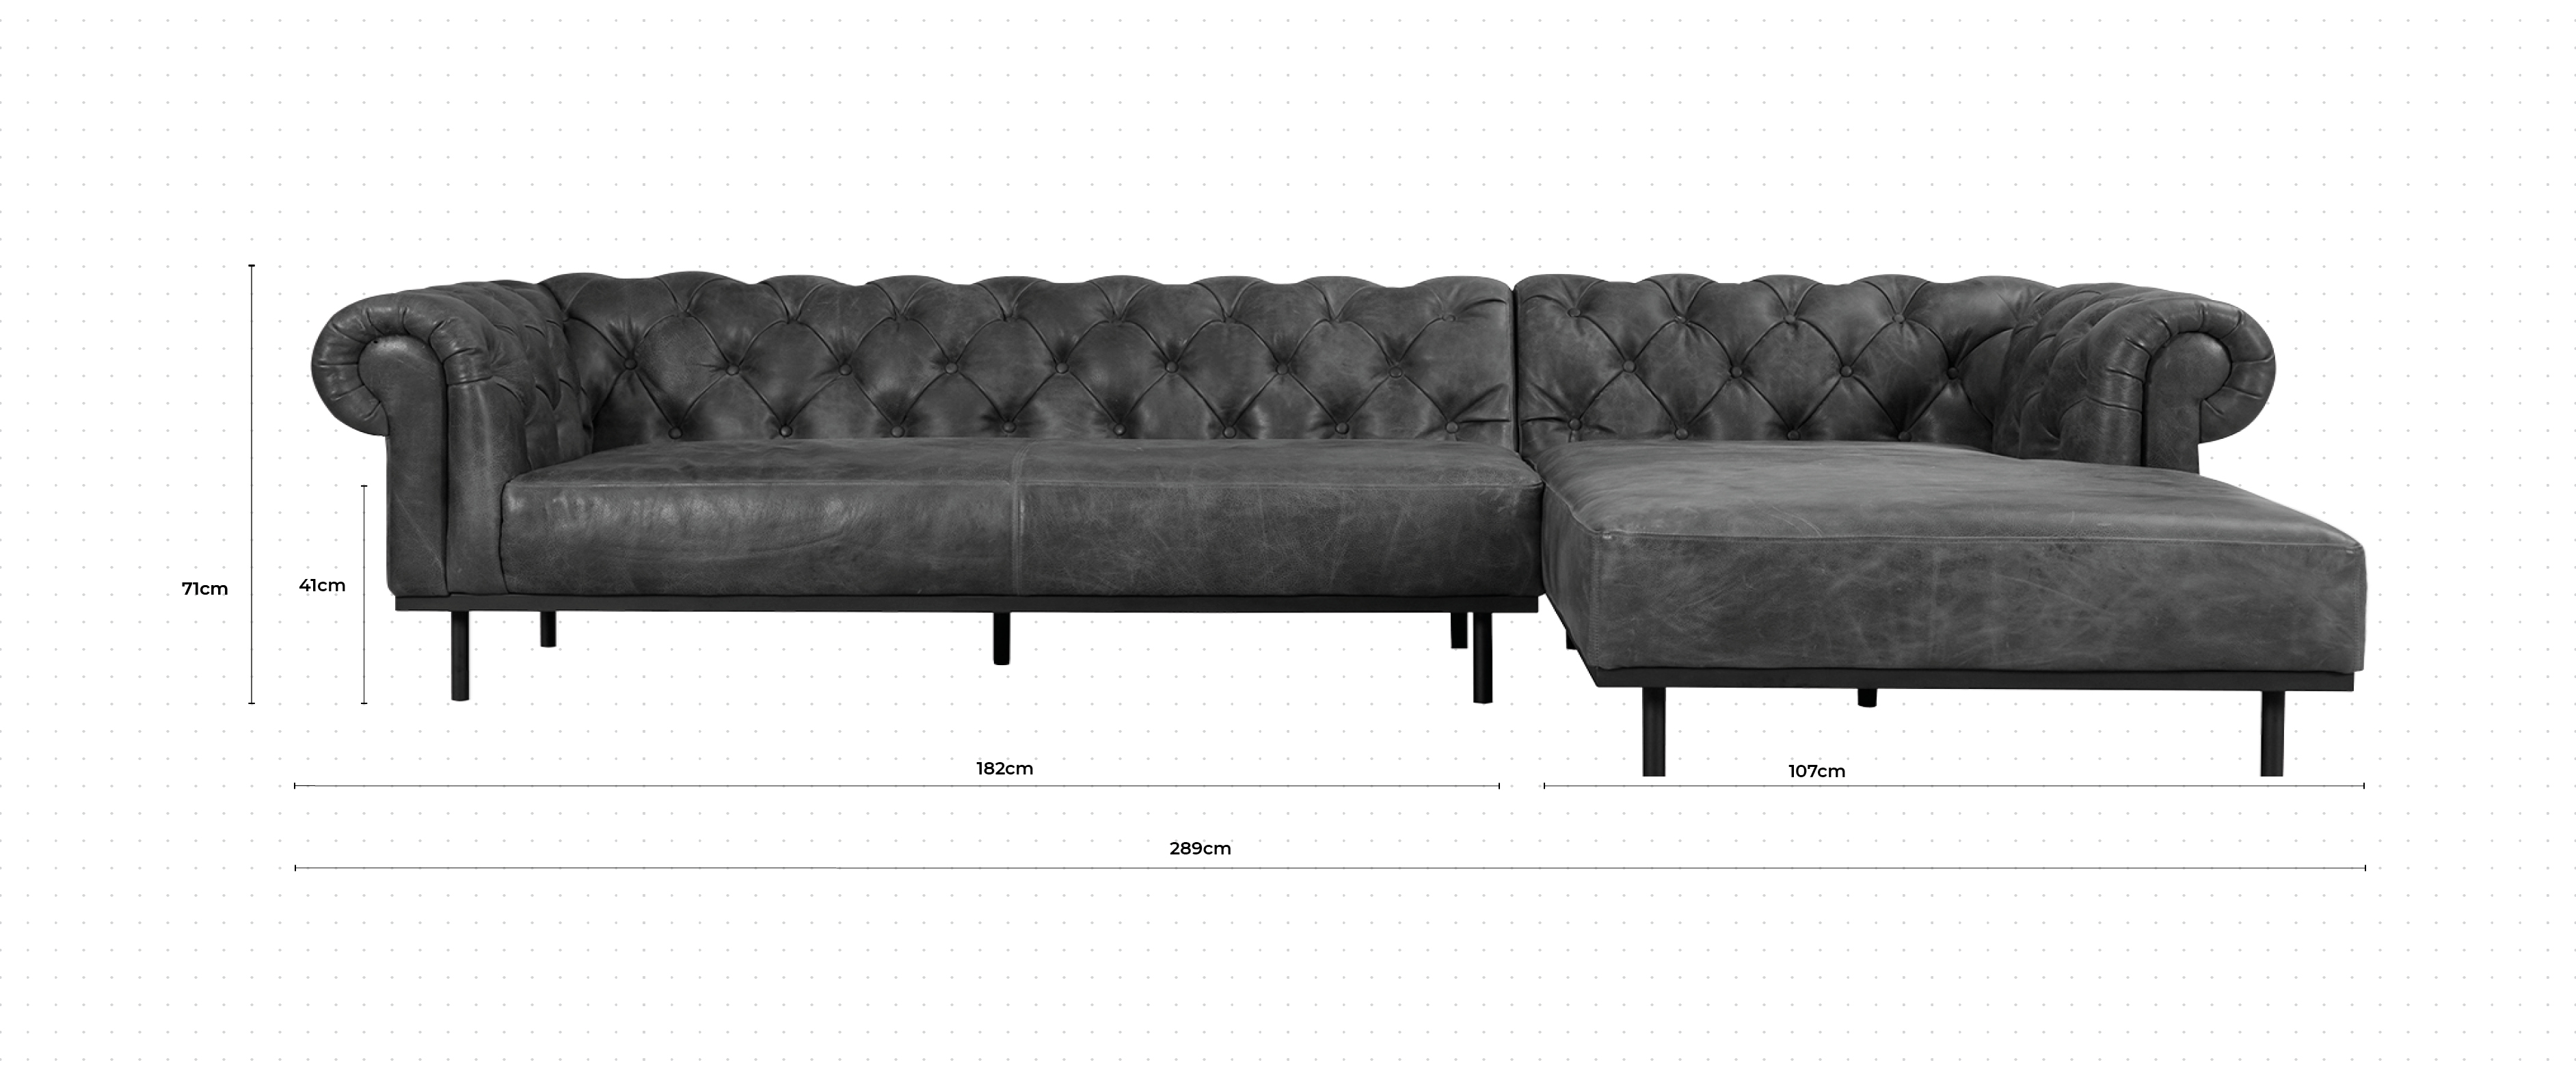 Parfait Large Chaise Sofa RHF dimensions